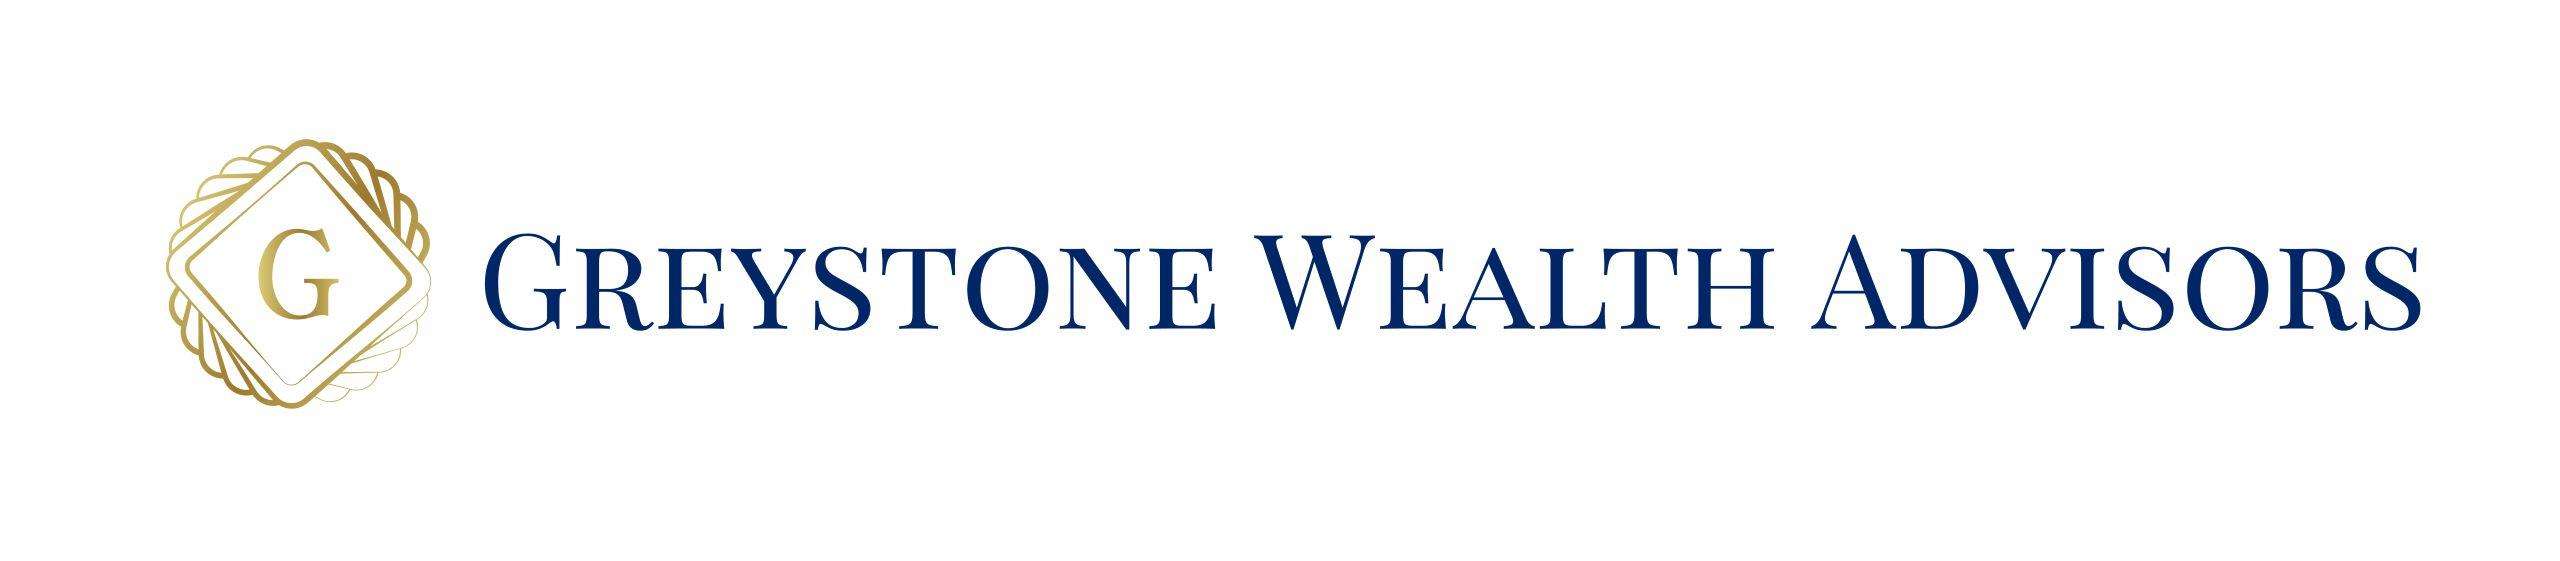 Greystone Wealth Advisors Logo